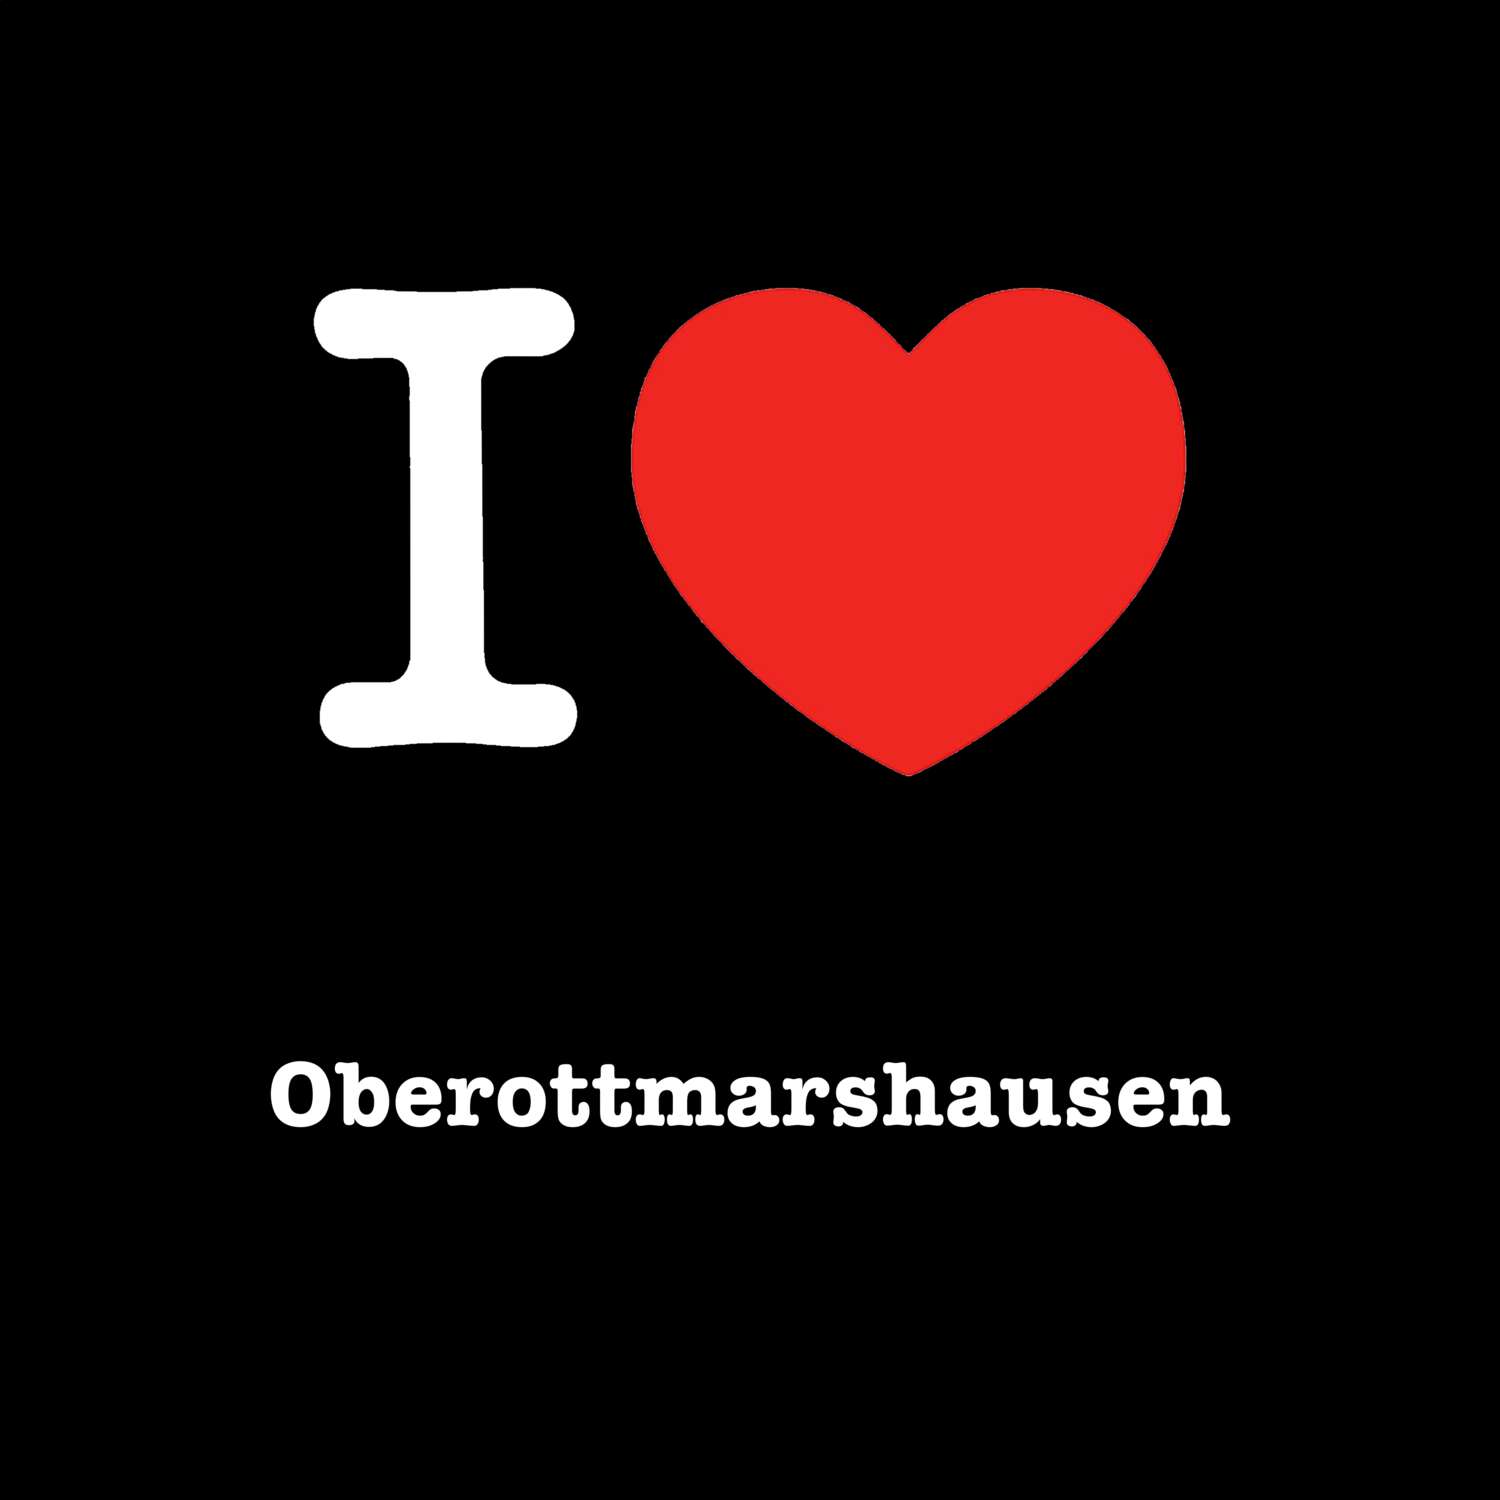 Oberottmarshausen T-Shirt »I love«